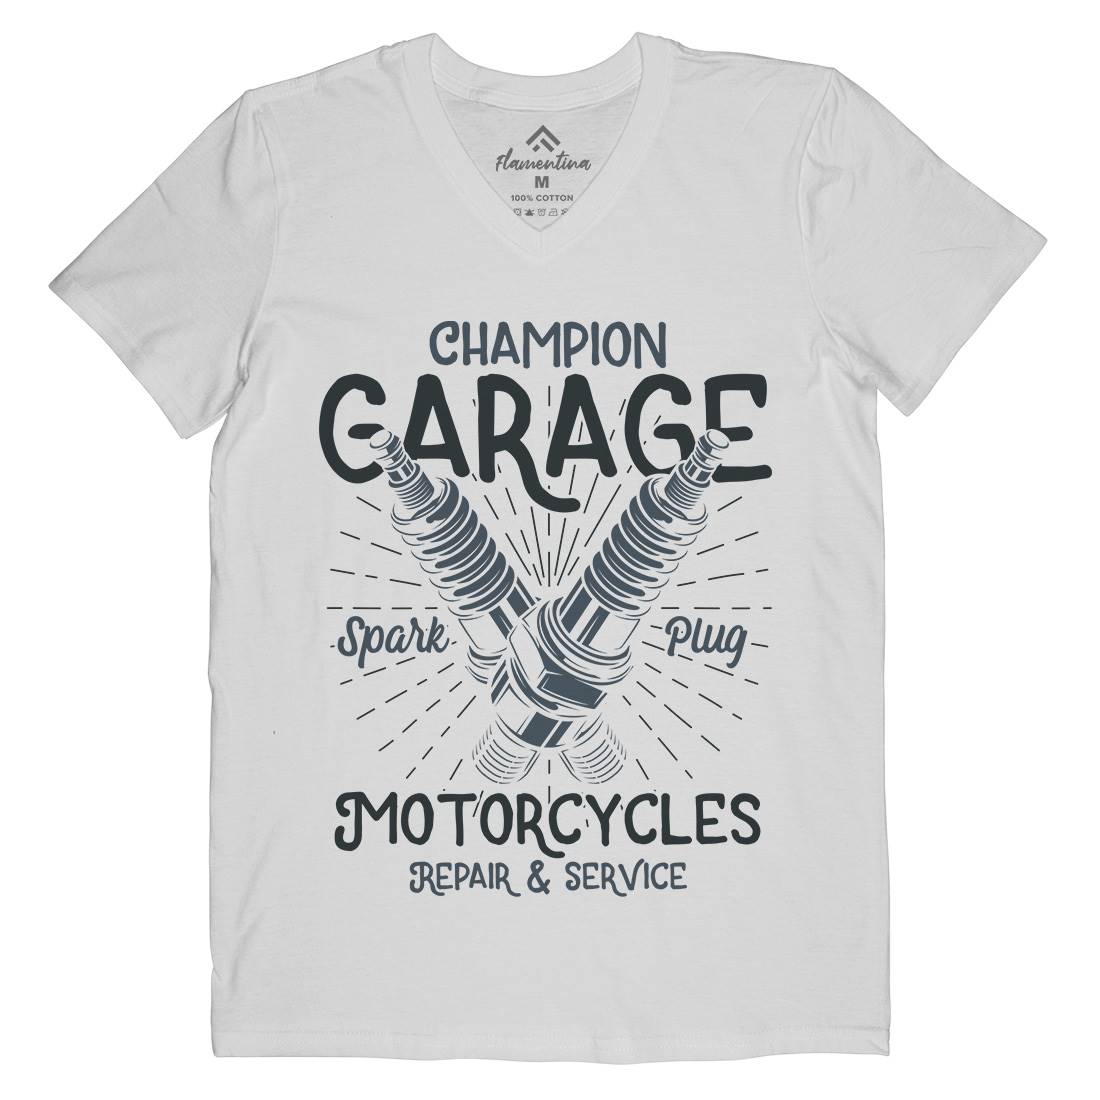 Champion Garage Mens V-Neck T-Shirt Motorcycles B835